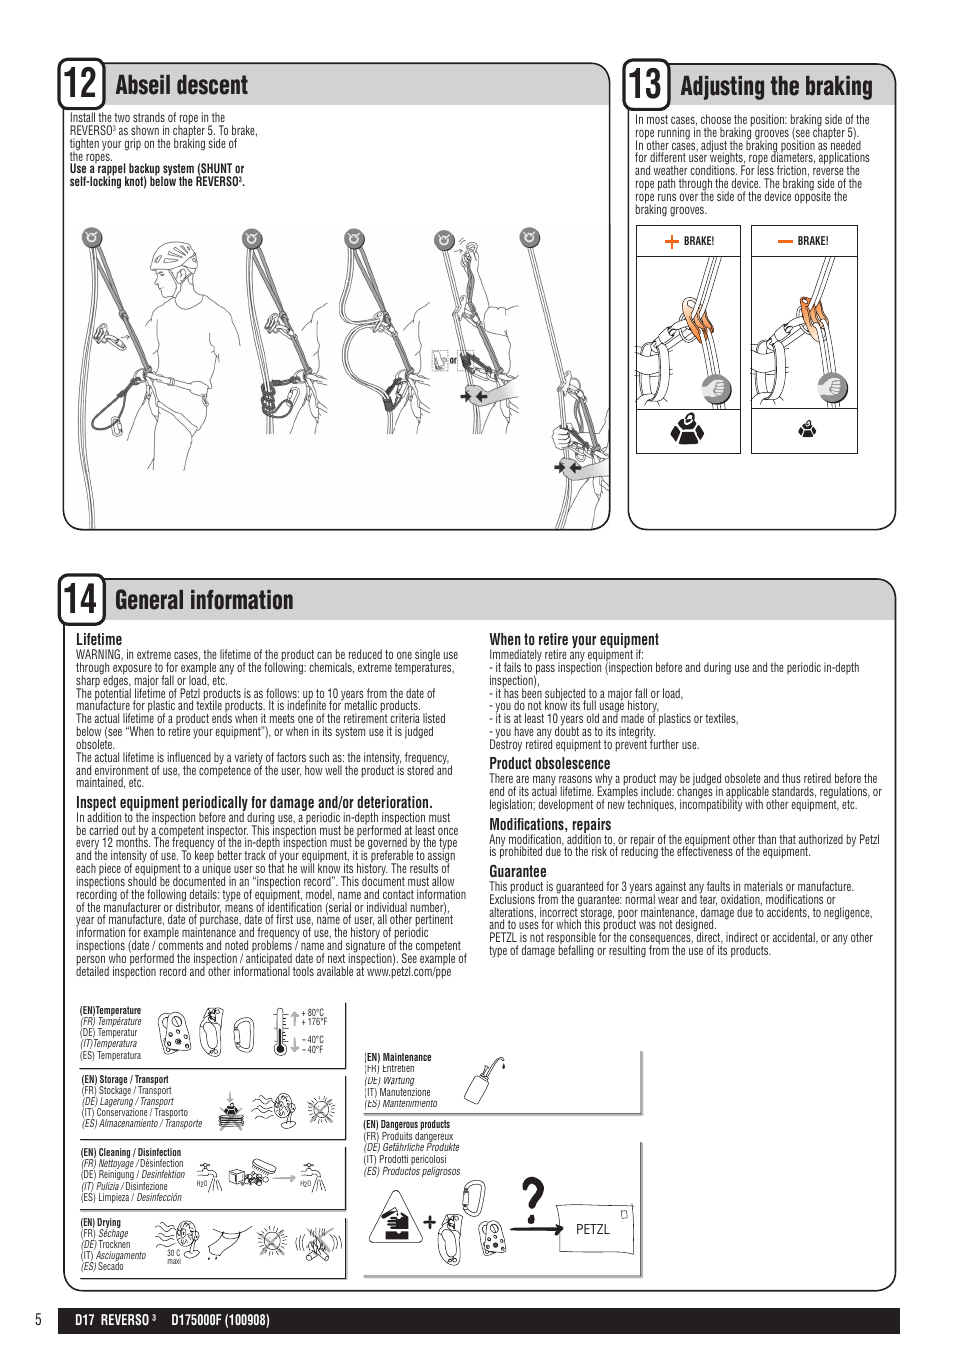 En + drawings, General information, Adjusting the braking | Petzl REVERSO 3  User Manual | Page 5 / 25 | Original mode